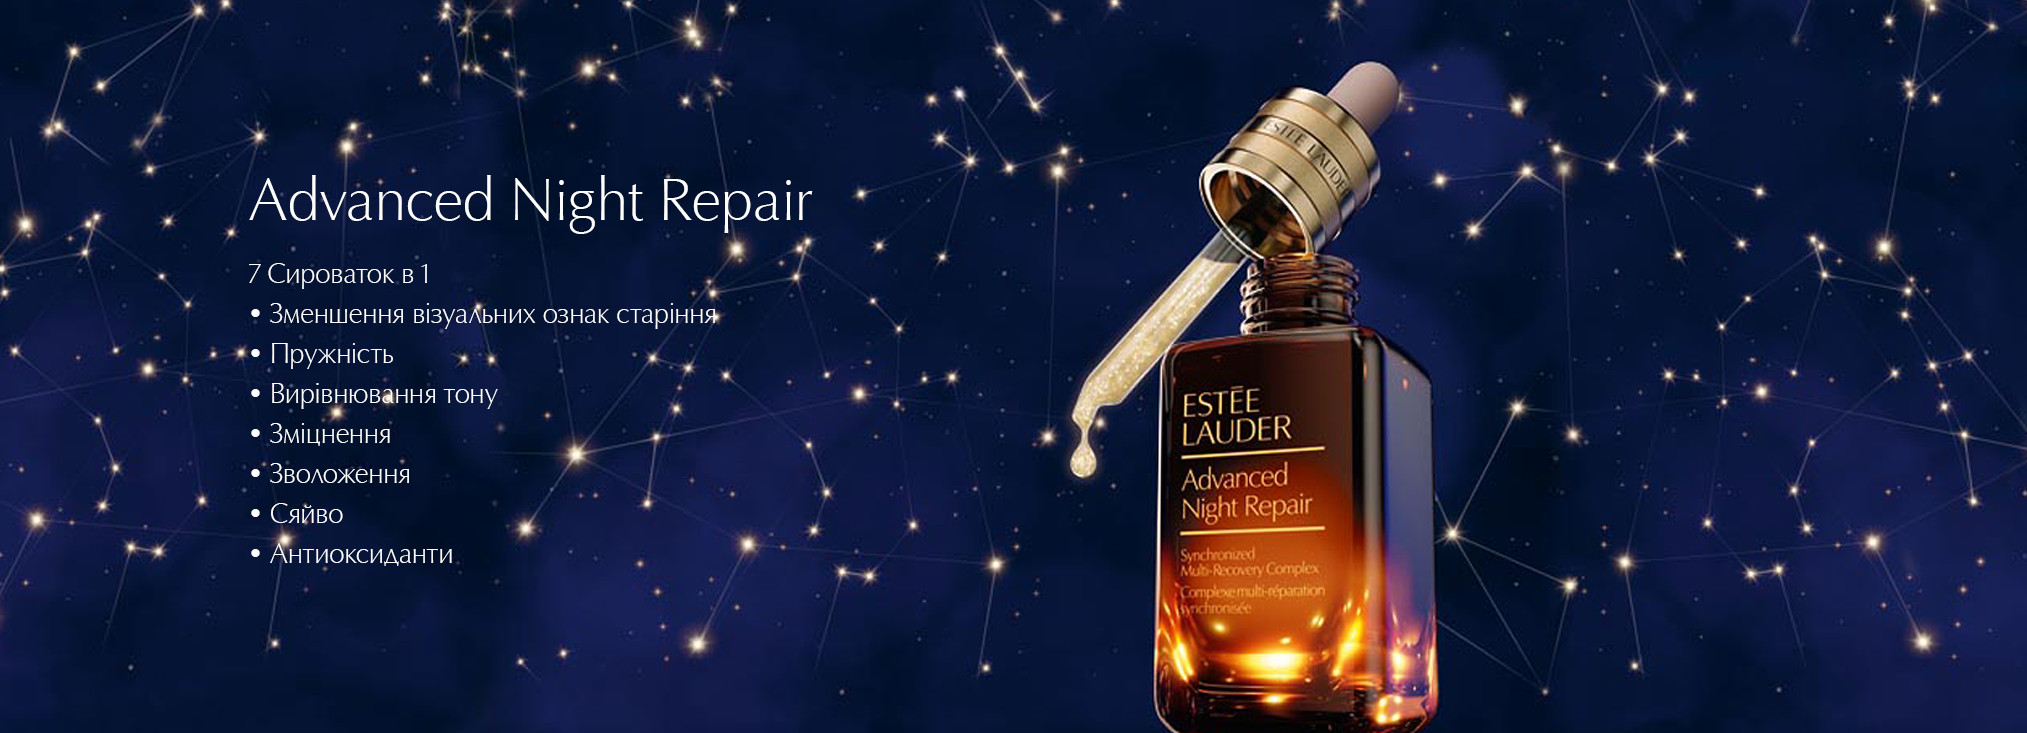 Estee Lauder Advanced Night Repair Synchronized Multi-Recovery Complex